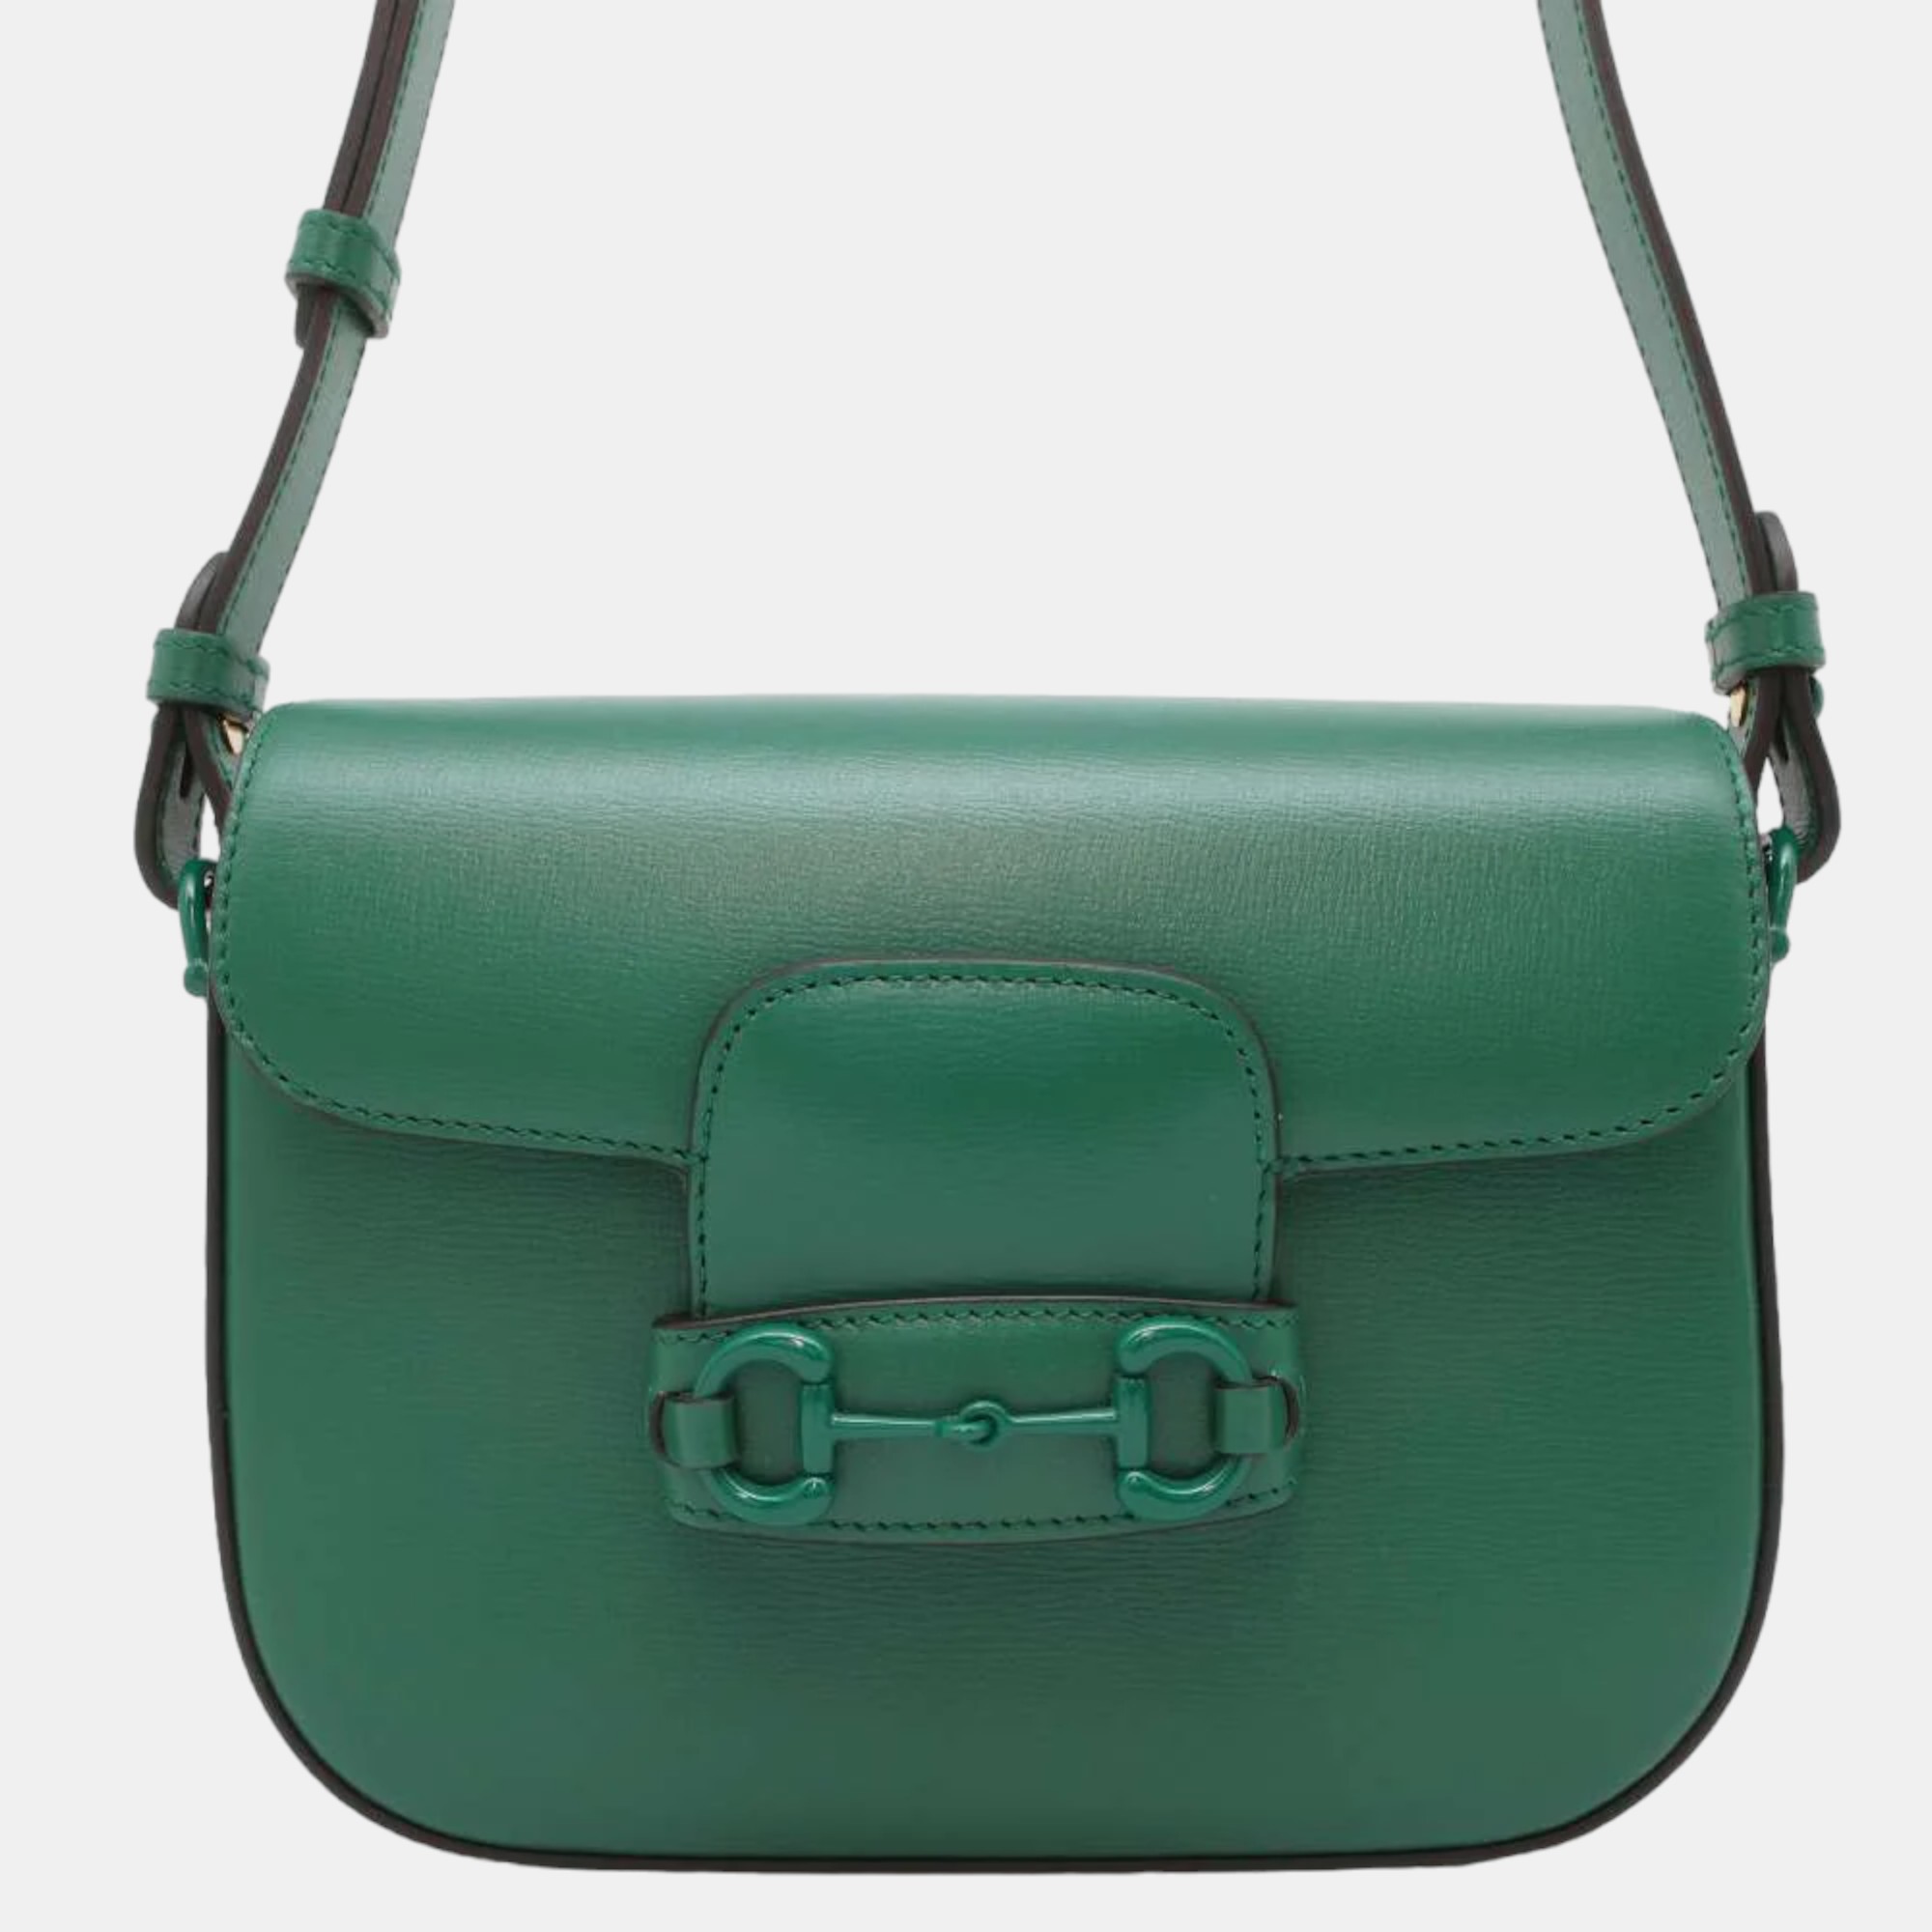 Gucci green leather horsebit 1955 shoulder bag